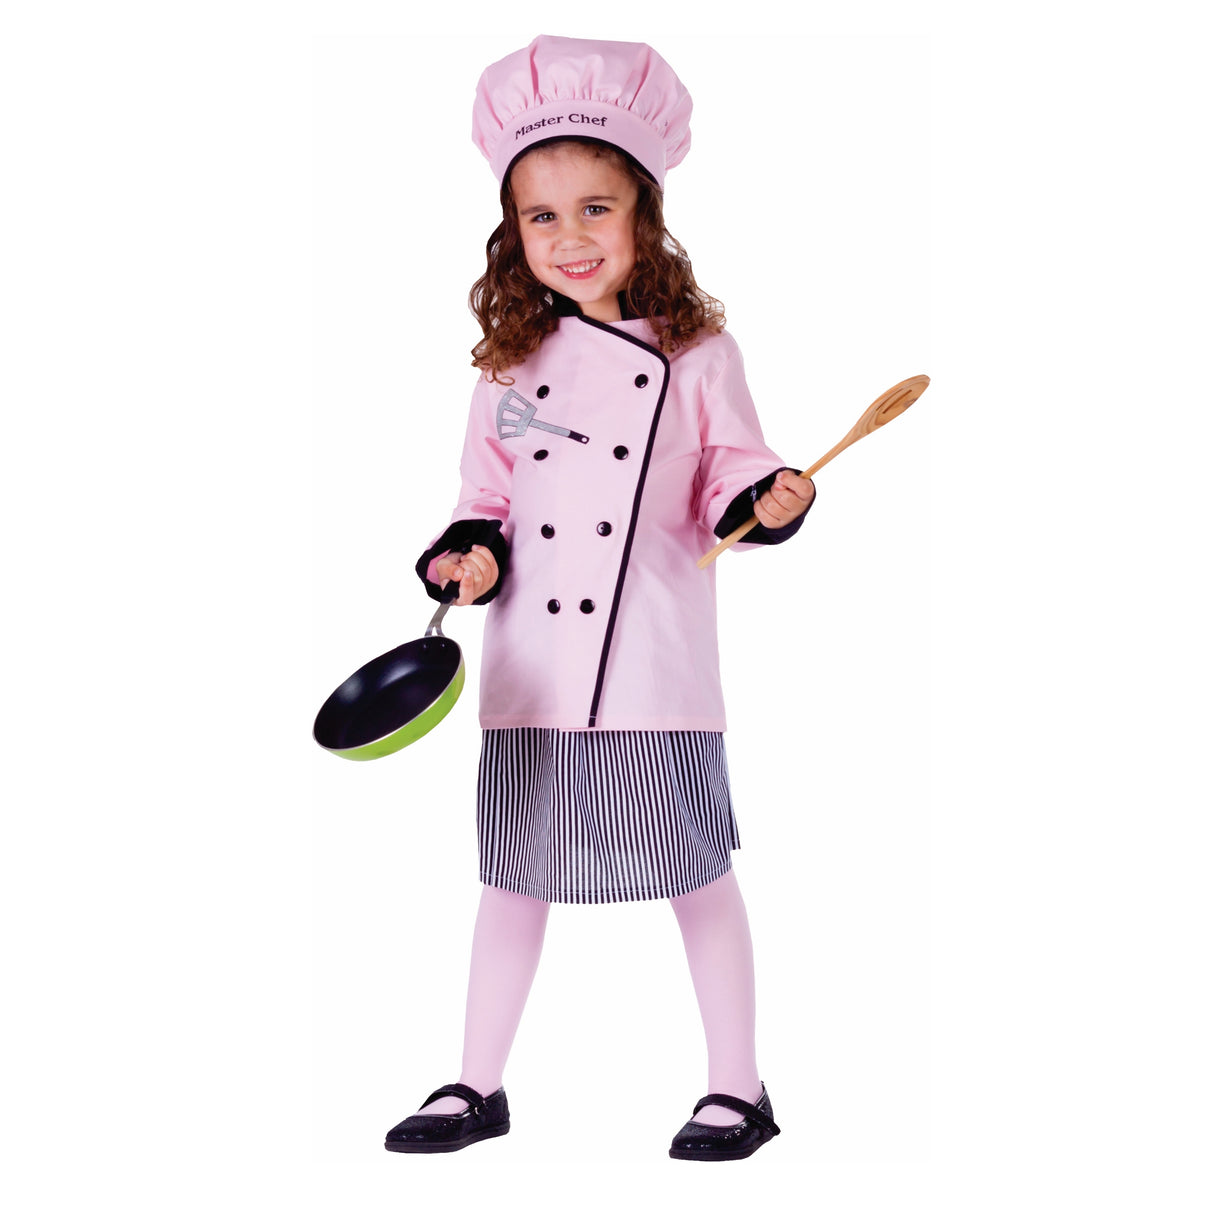 Master Chef Costume - Kids